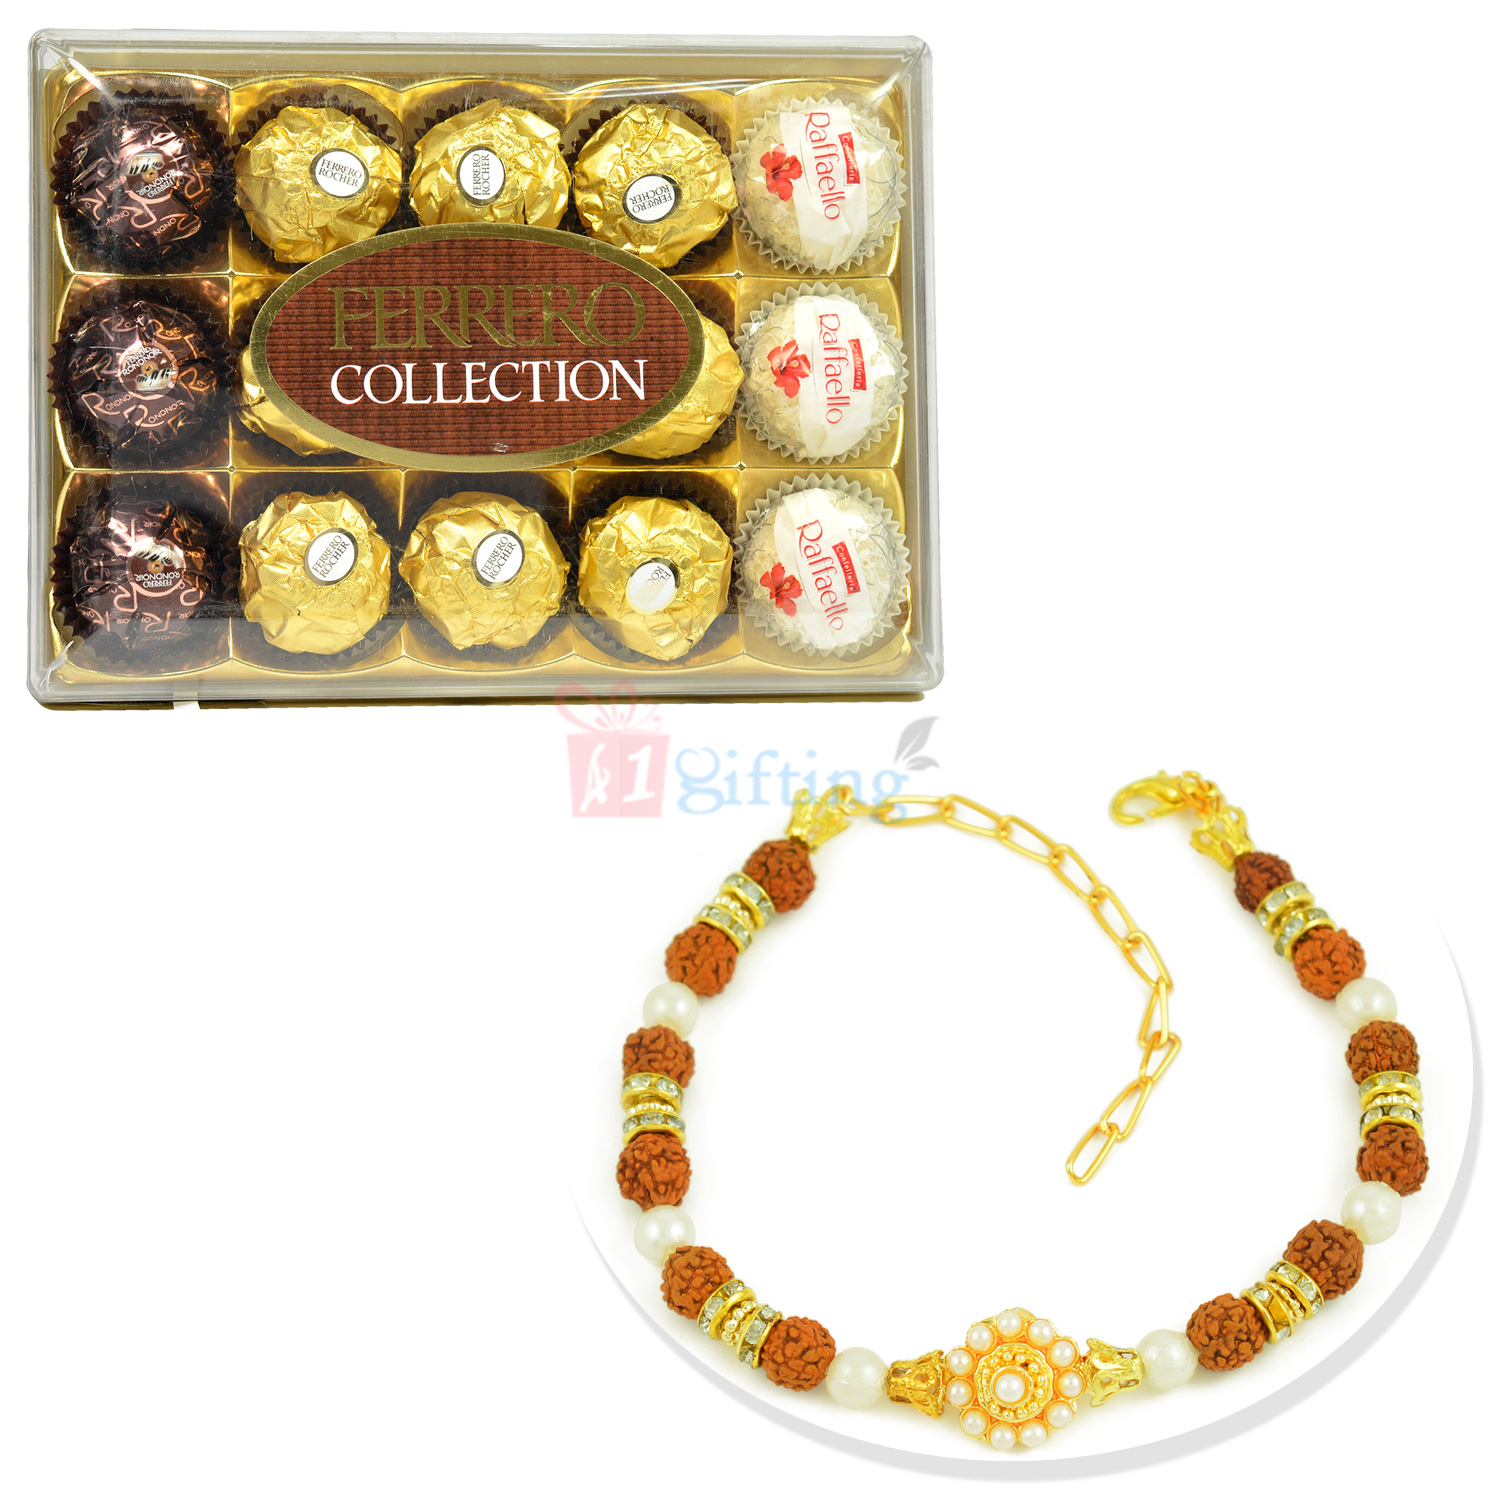 Rudraksh Pearl Bracelet Rakhi with 15 Pcs Ferrero Collection Chocolate